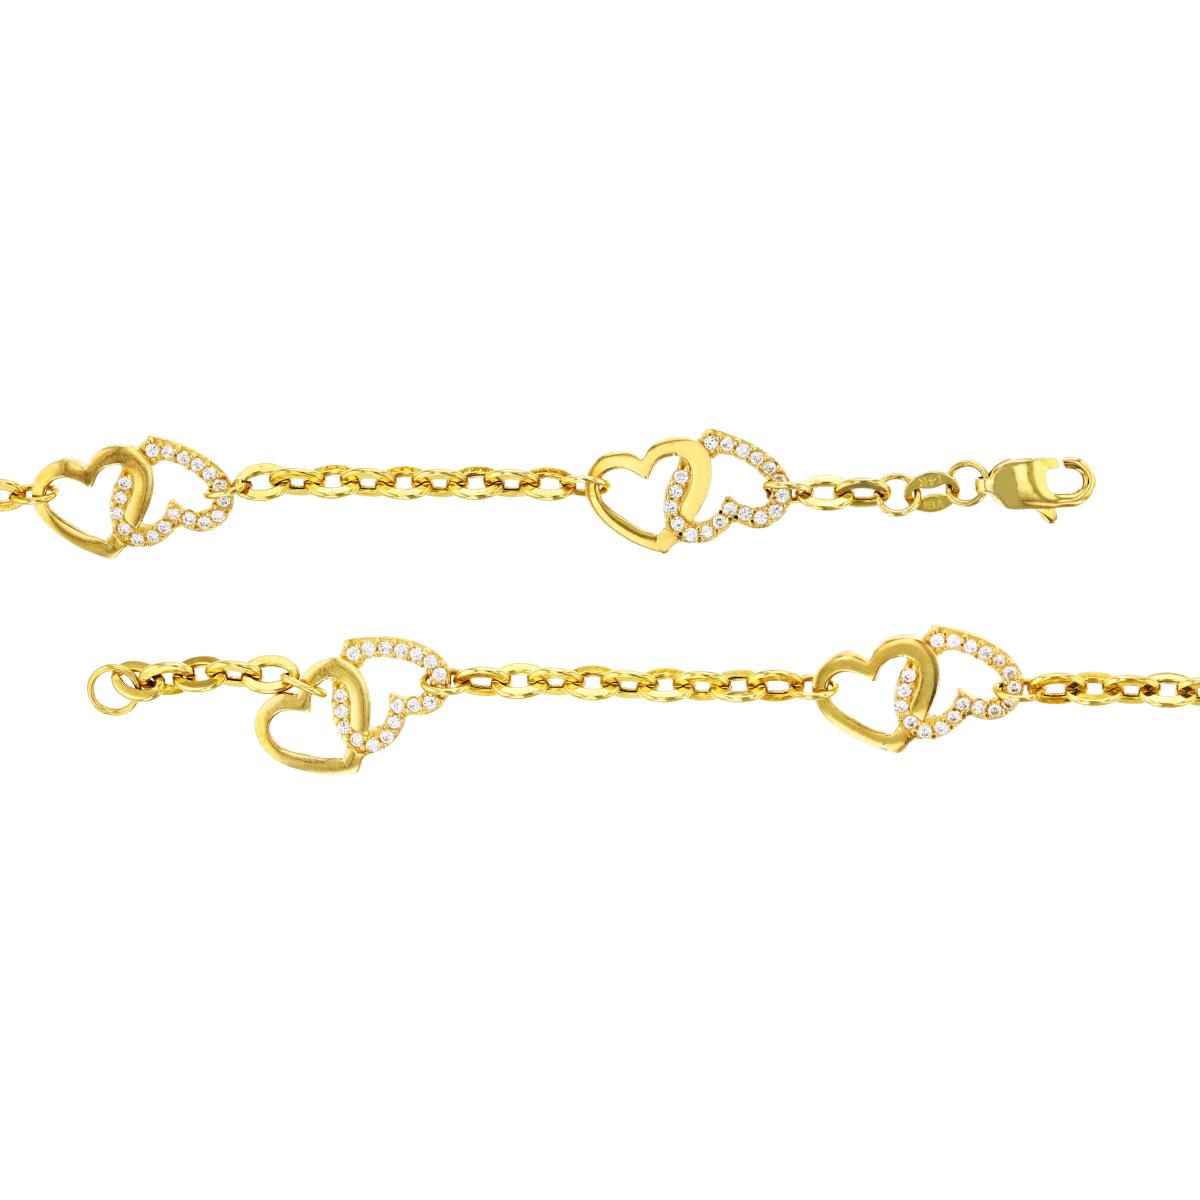 10K Yellow Gold Double Heart 7.25" Bracelet with Cubic Zirconia